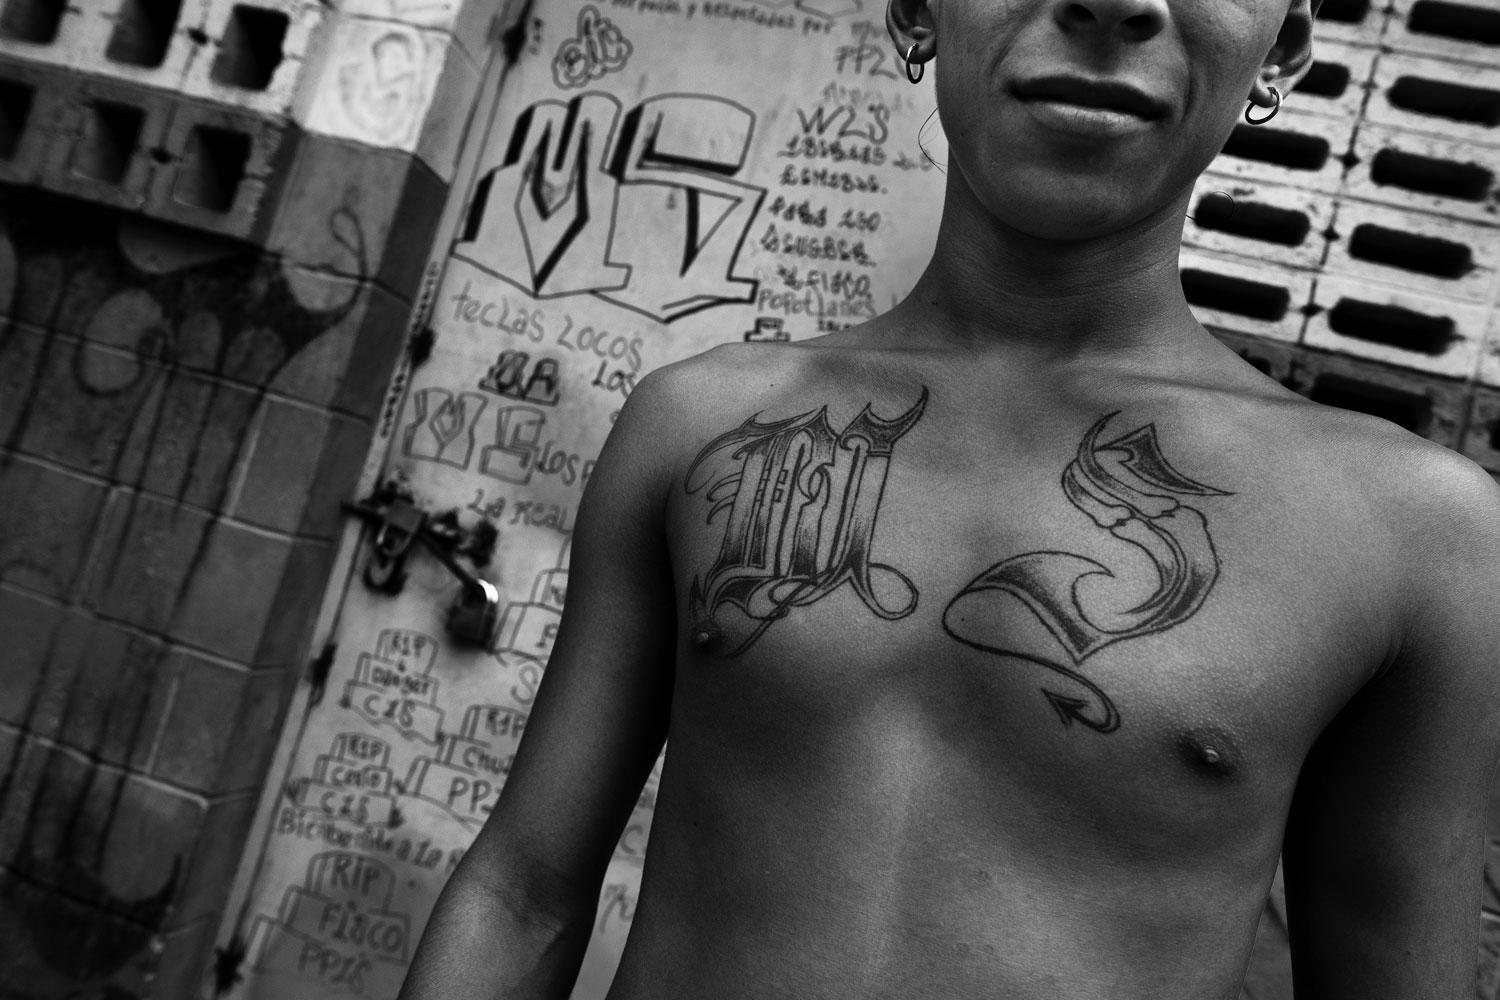 Exgang members in El Salvador erase tattoos from violent past